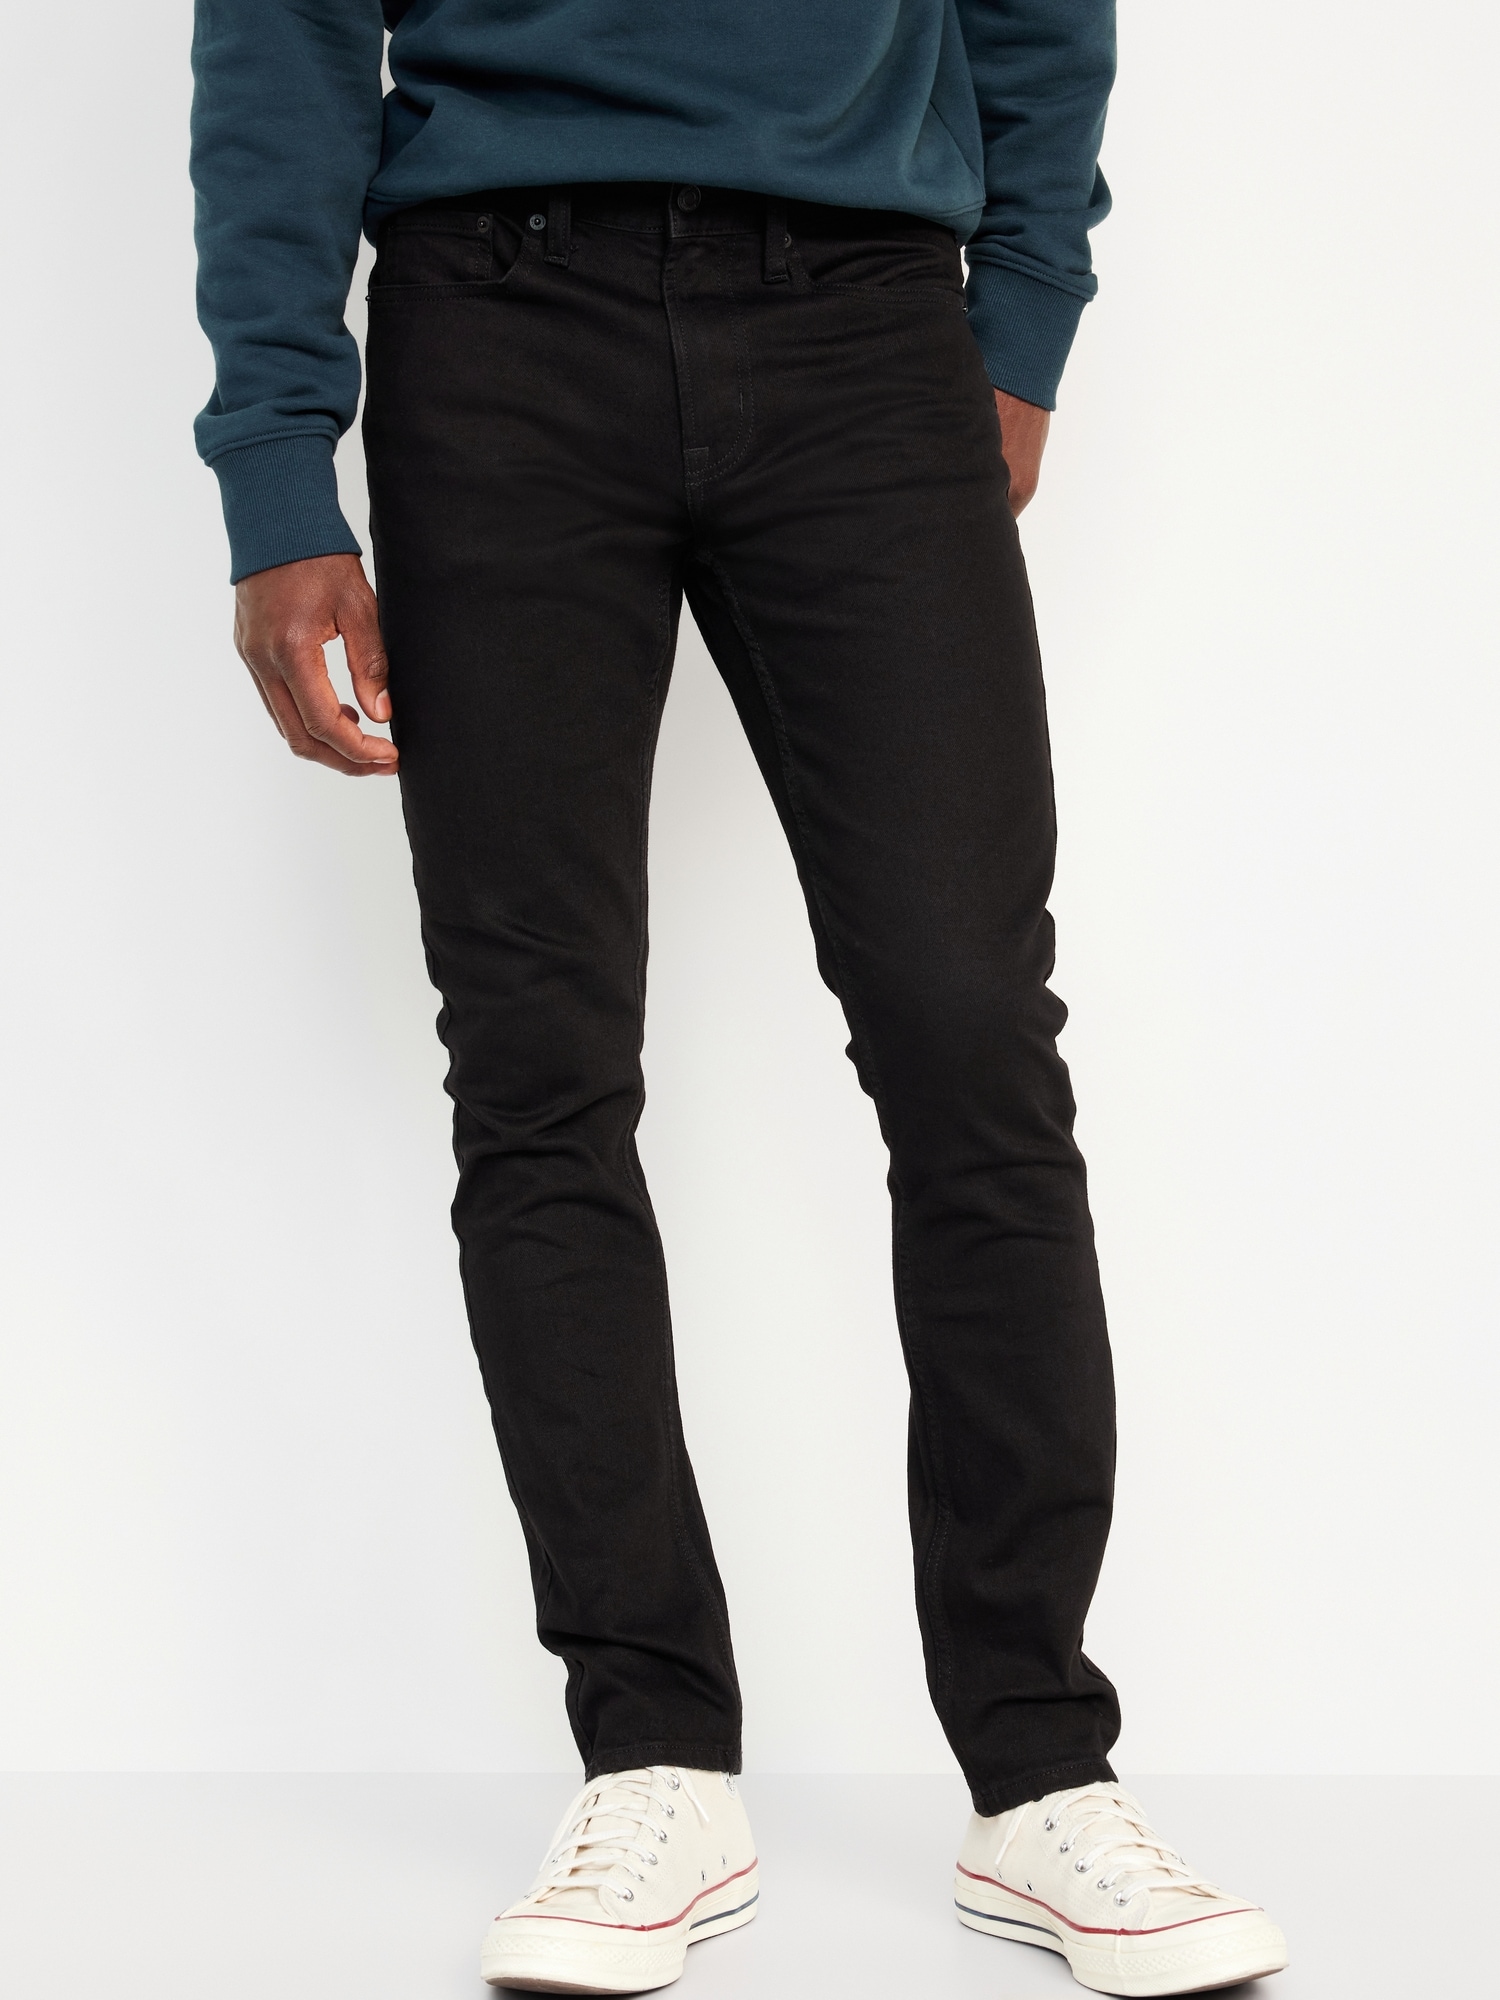 Slim Built-In-Flex Jeans for Men | Old Navy